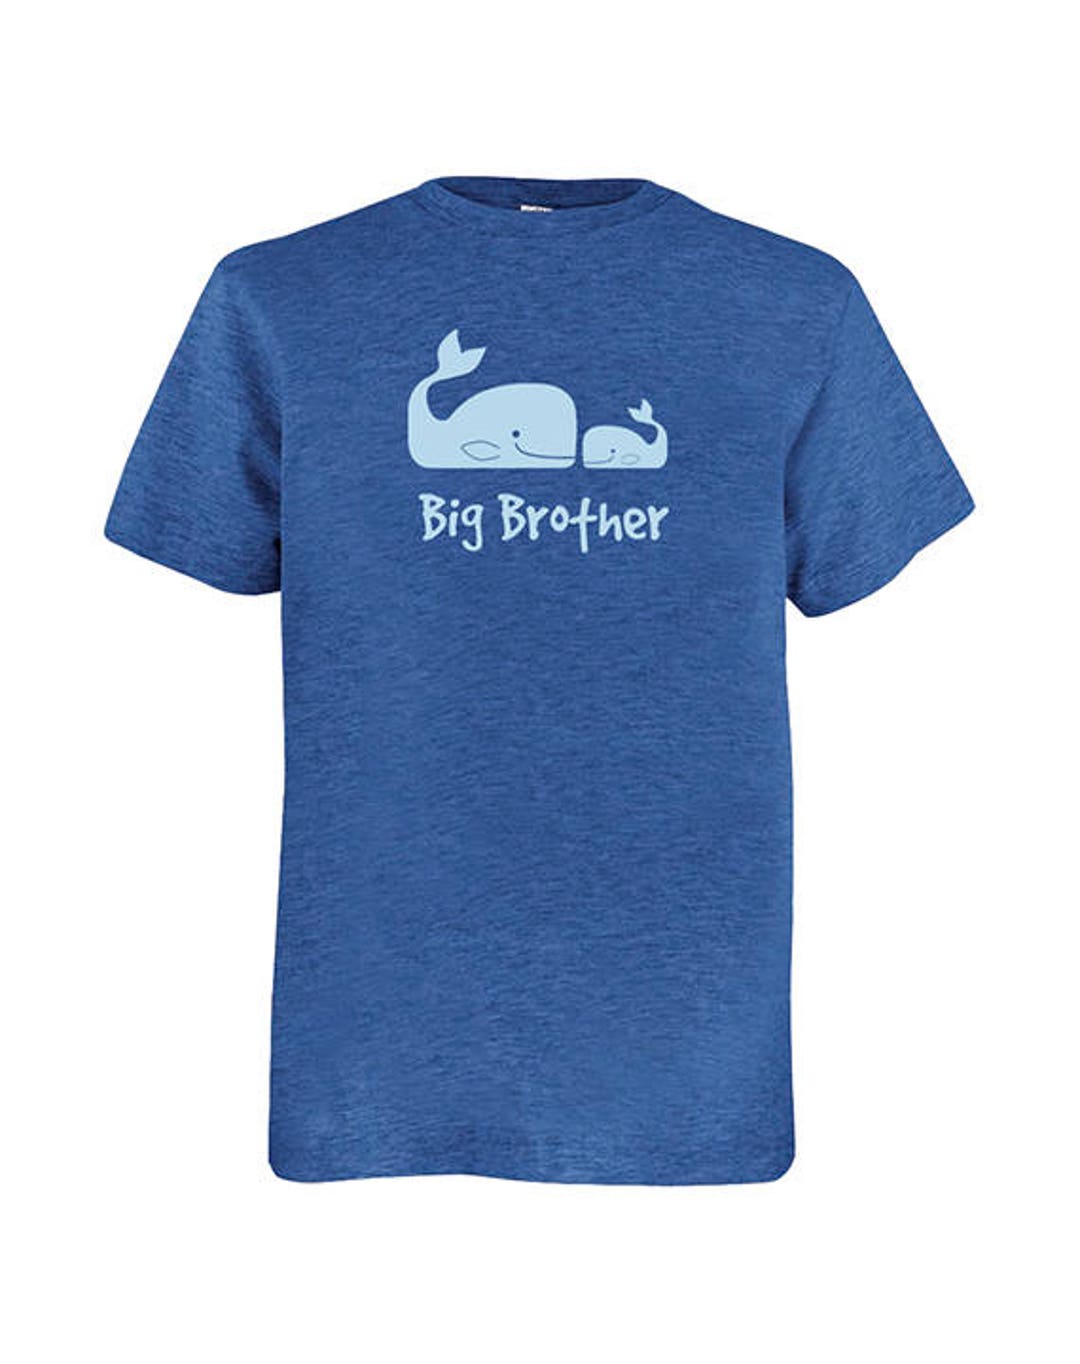 Big Brother Shirt Multiple Colors Kids Big Brother Present - Etsy